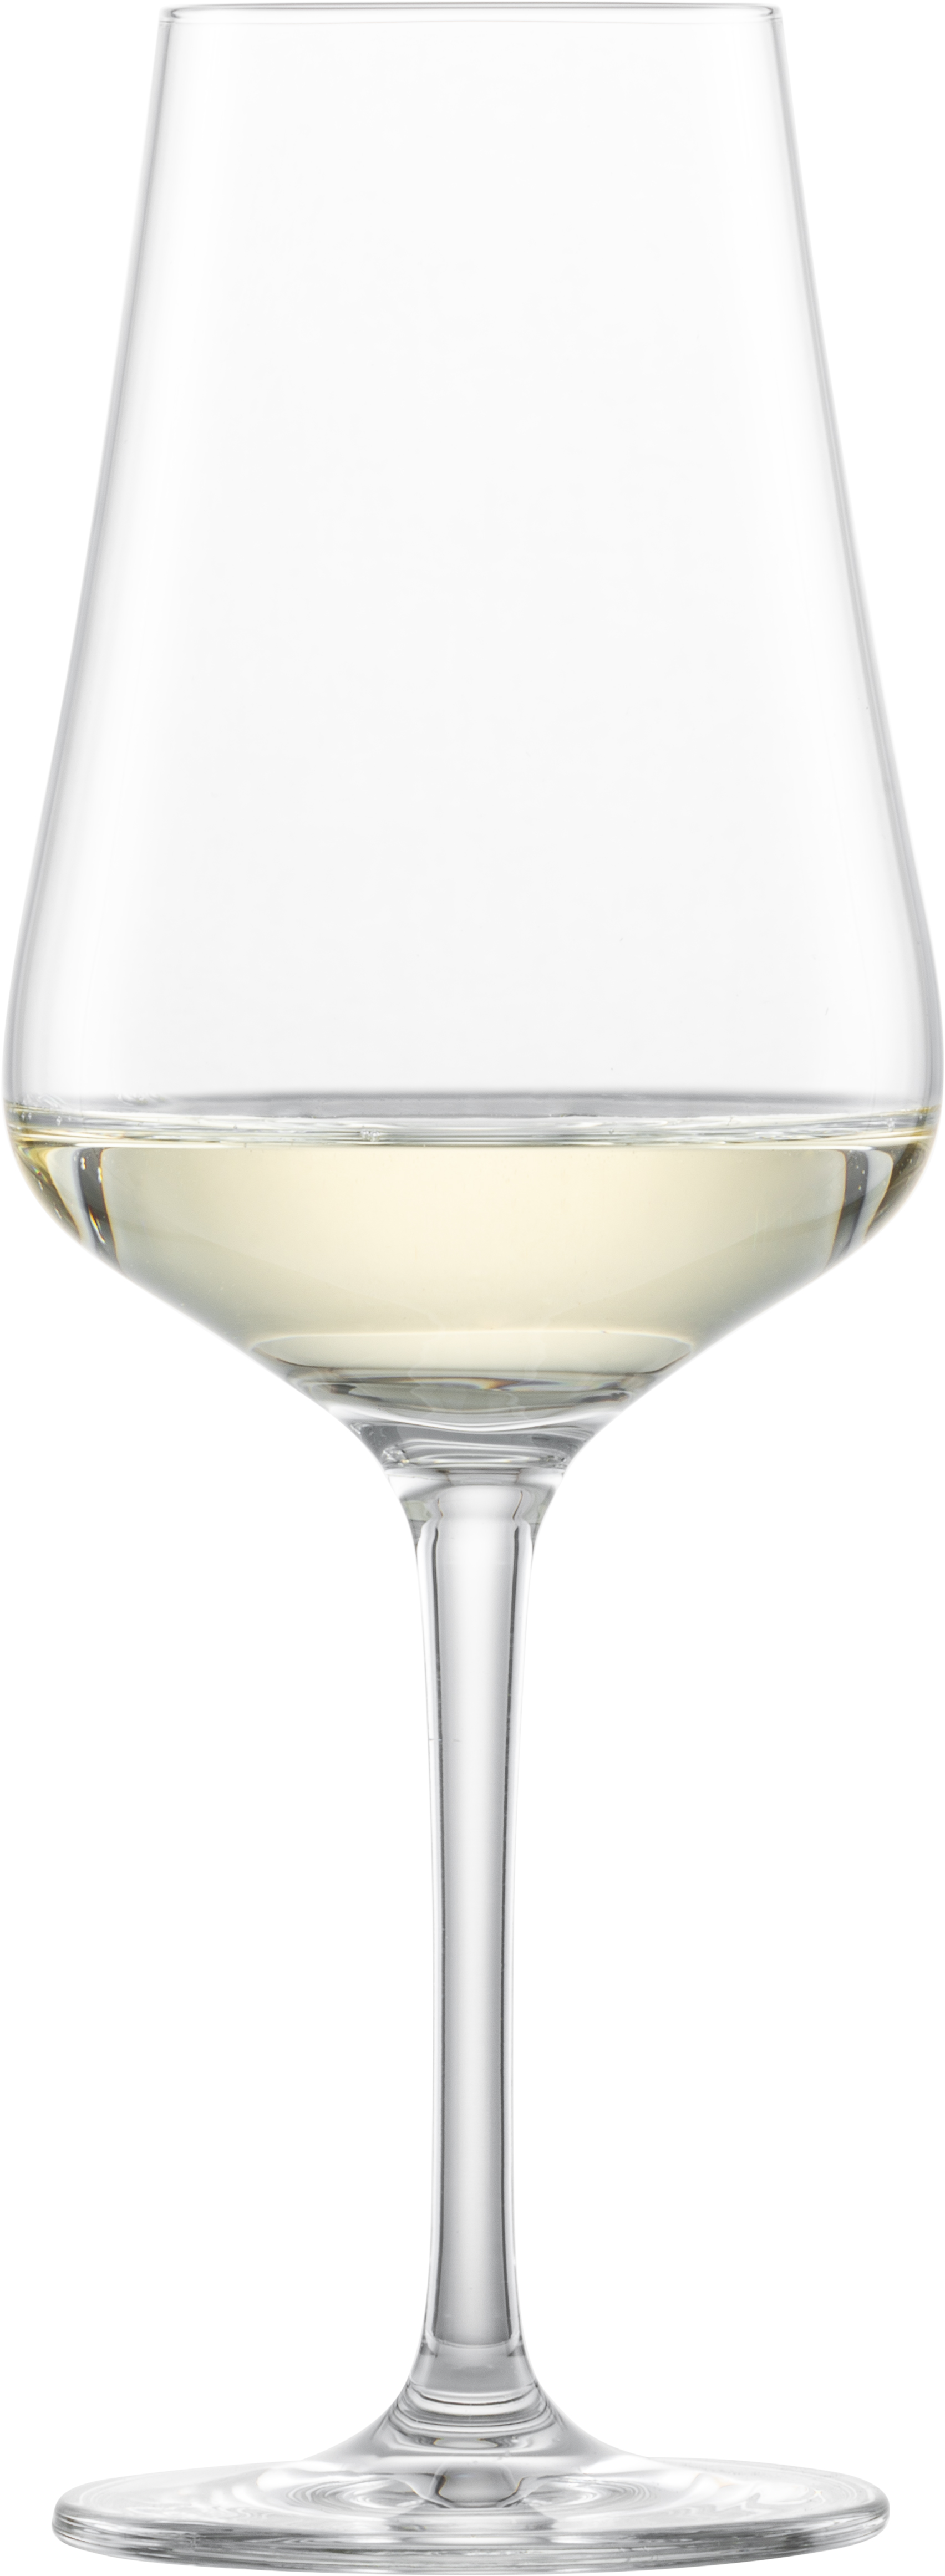 Verre à vin blanc Forte - Schott Zwiesel